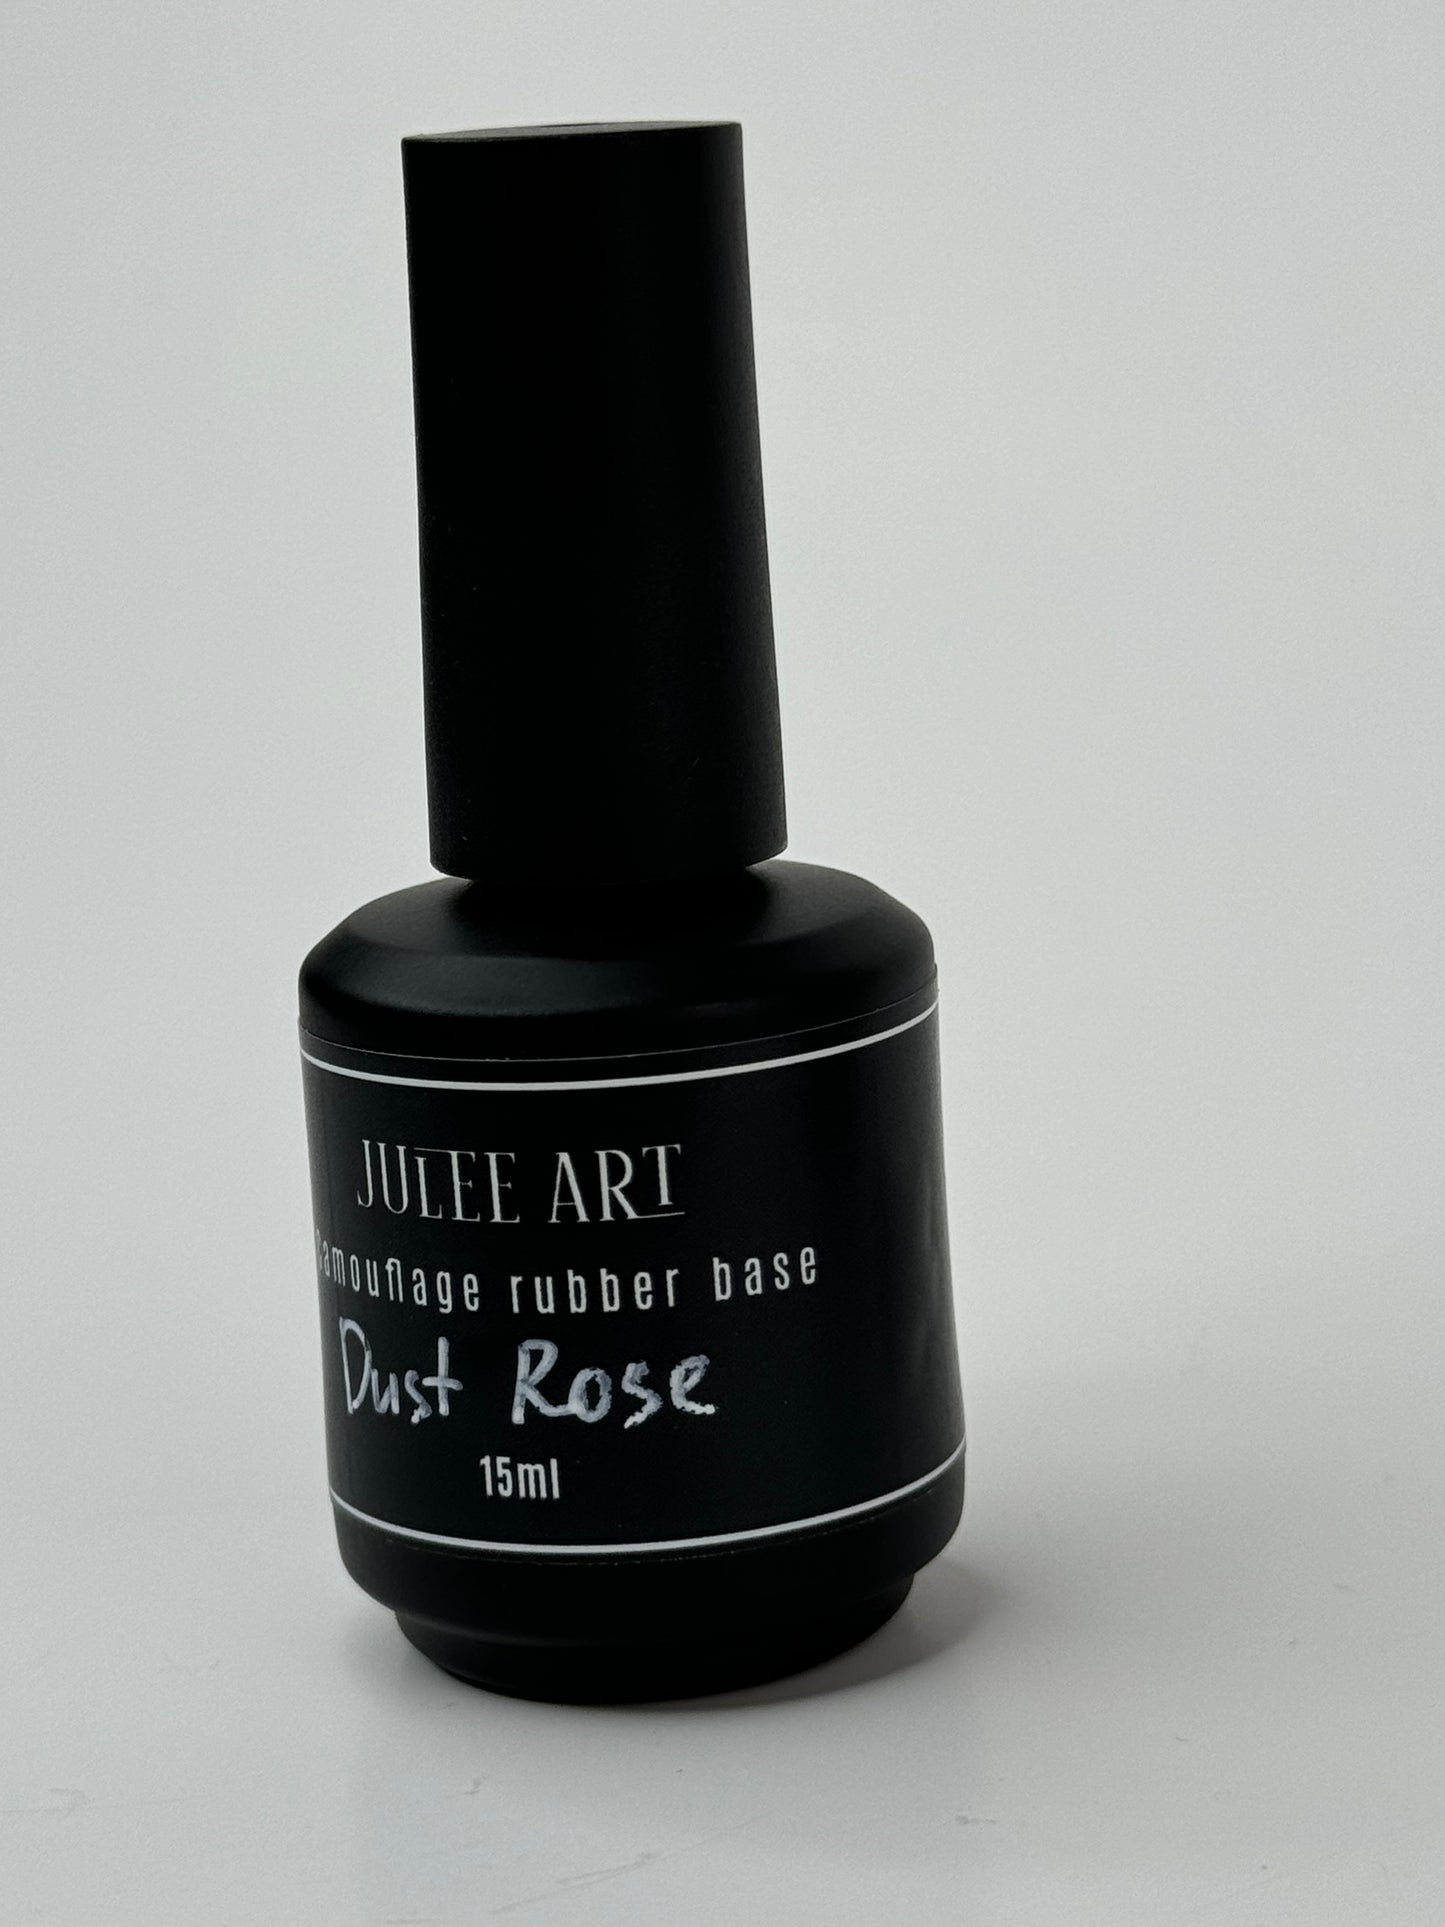 Julee Art Camouflage rubber base "Dust Rose"